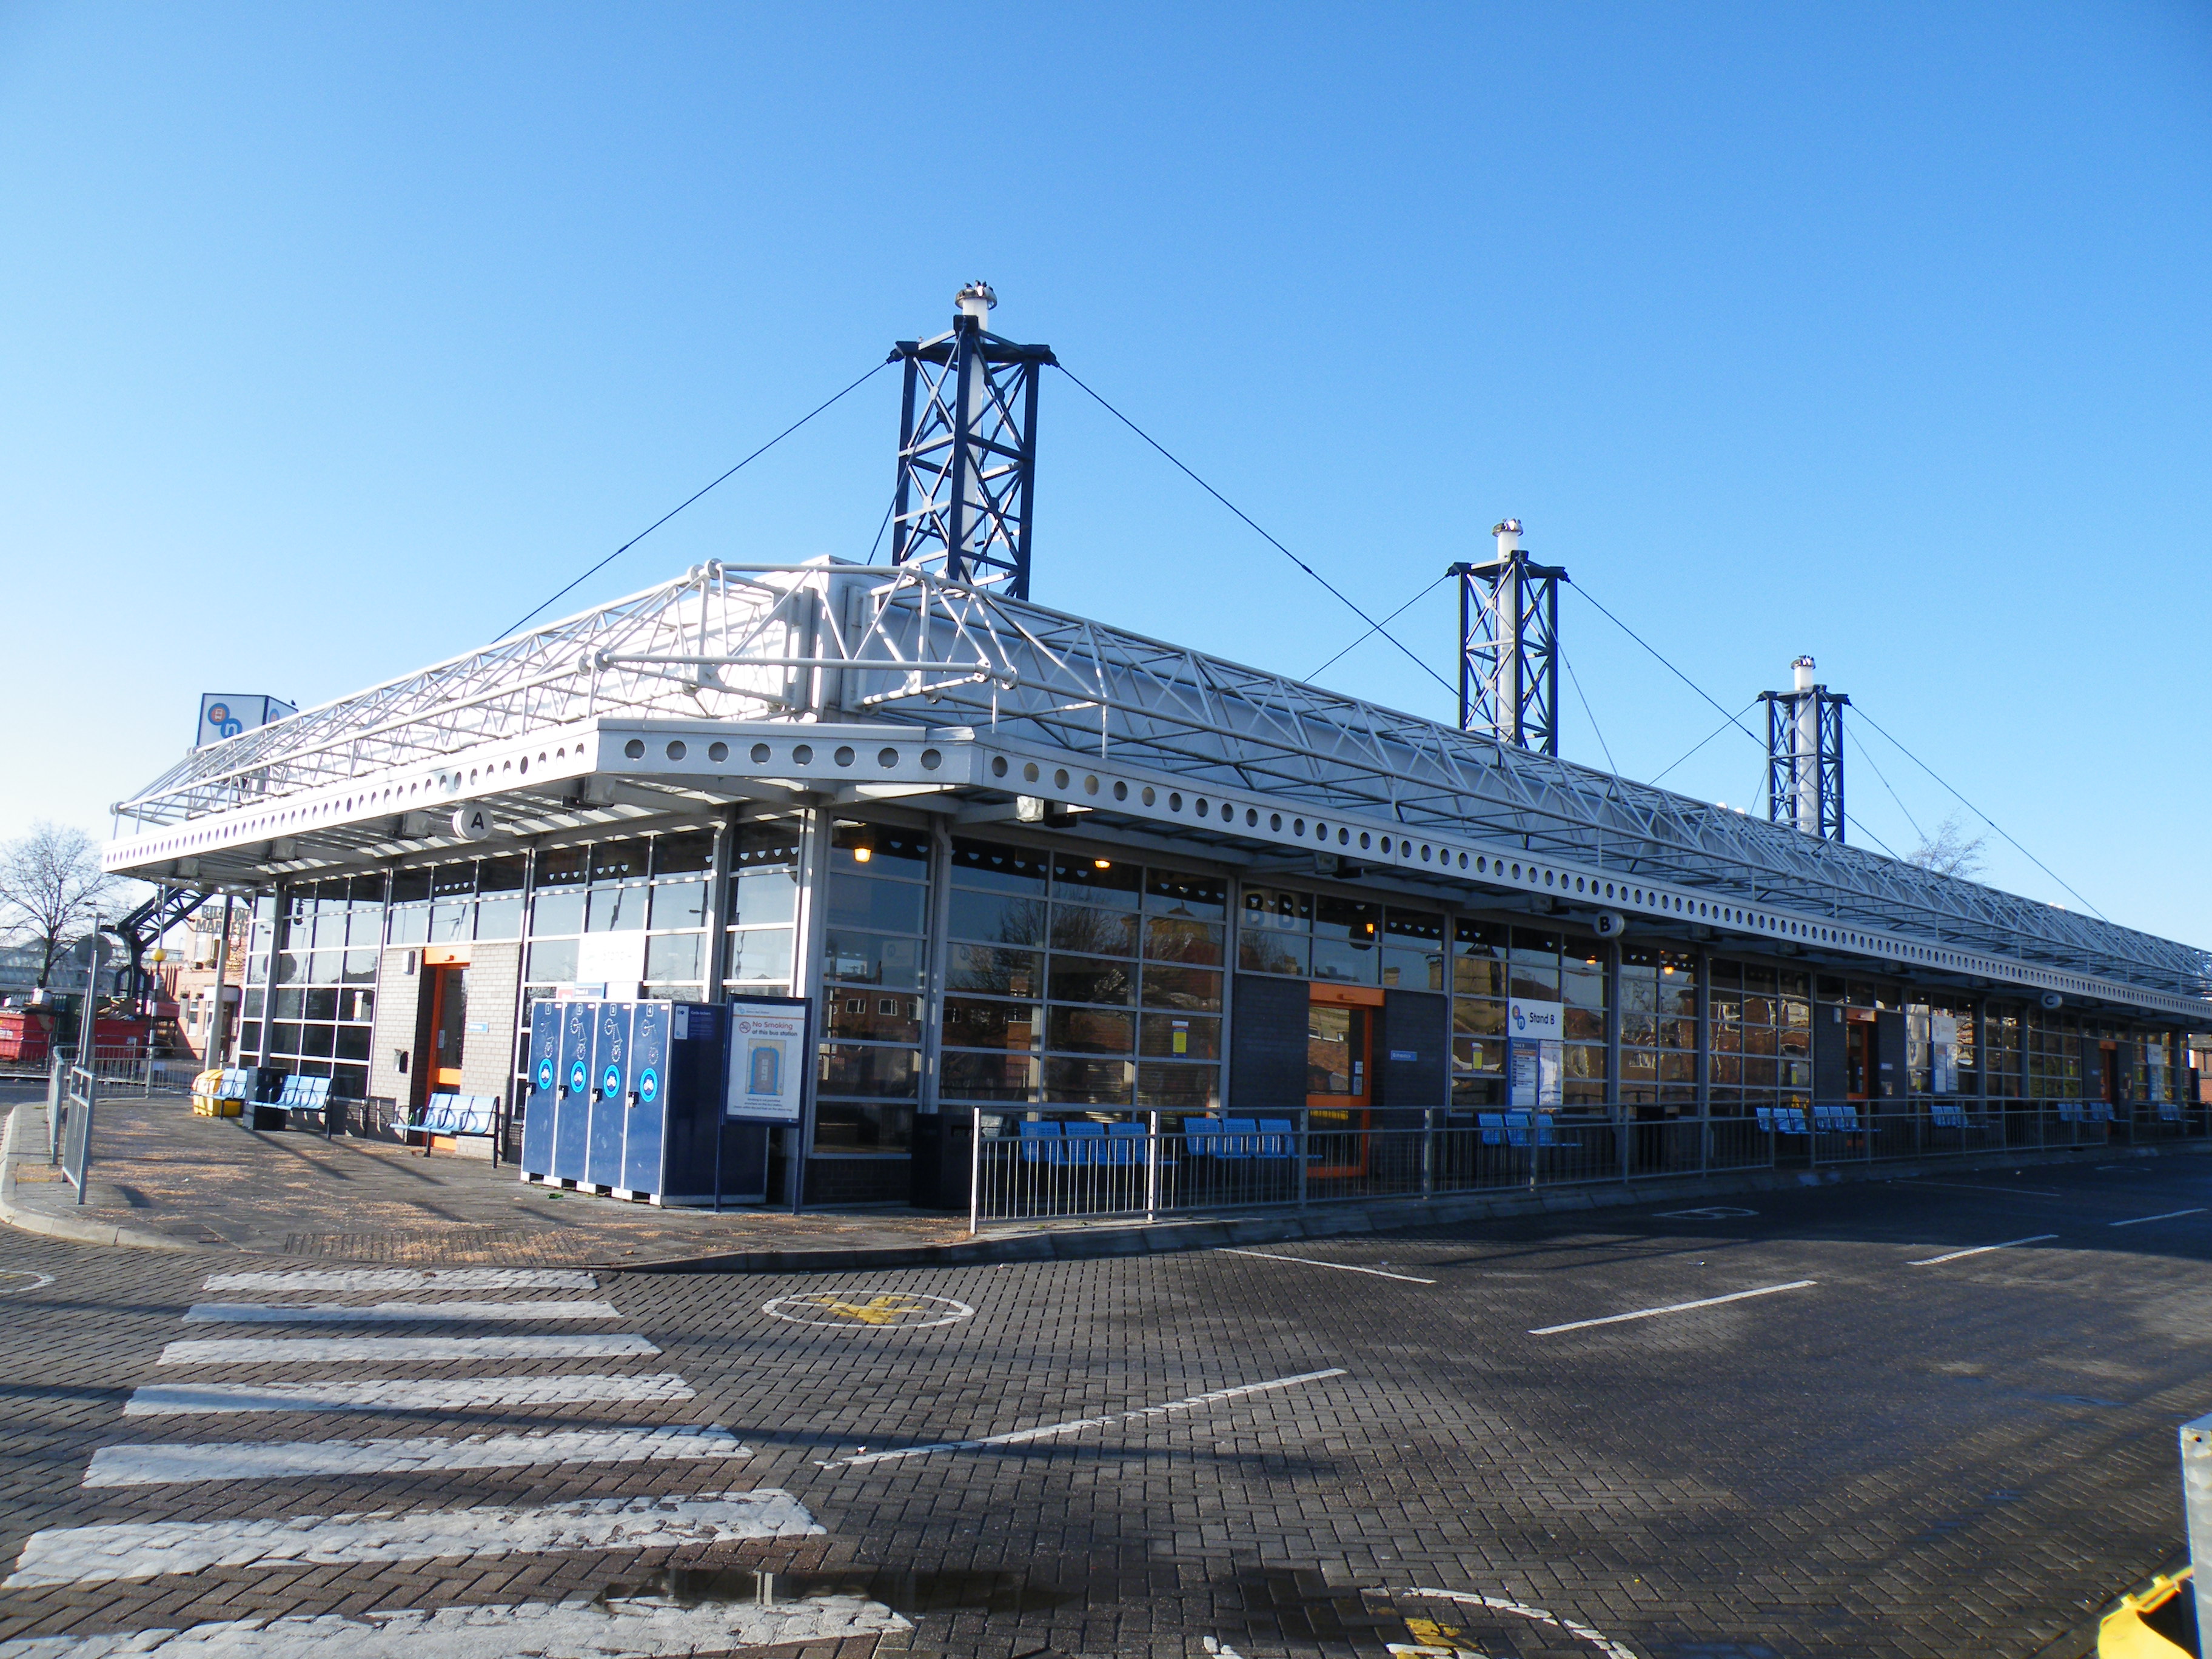 Bilston Bus Station